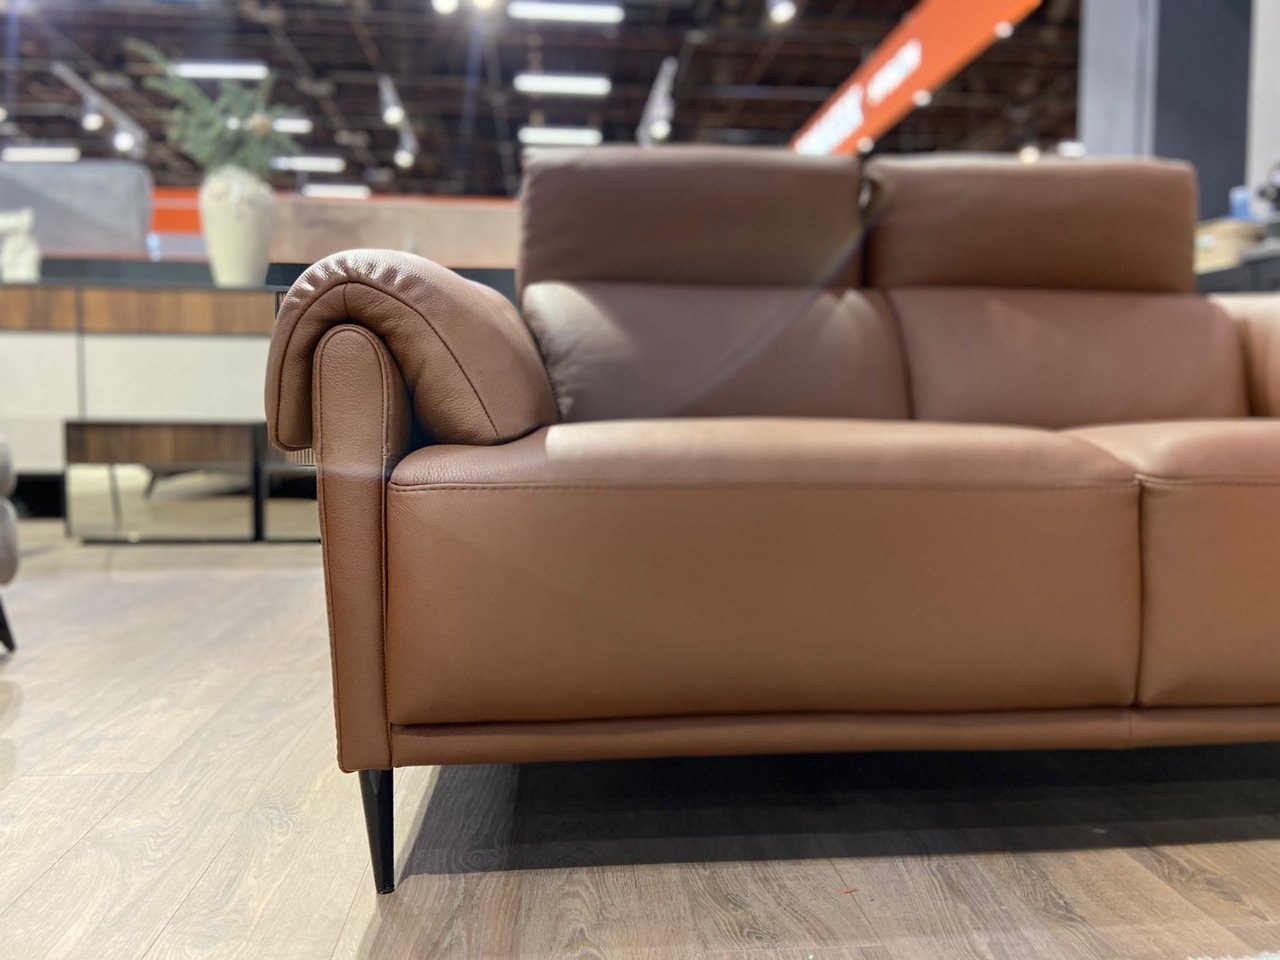 Итальянский диван от NICOLETTIHOME BRAMBLE — ₽, купить у официального дилера Nicolettihome